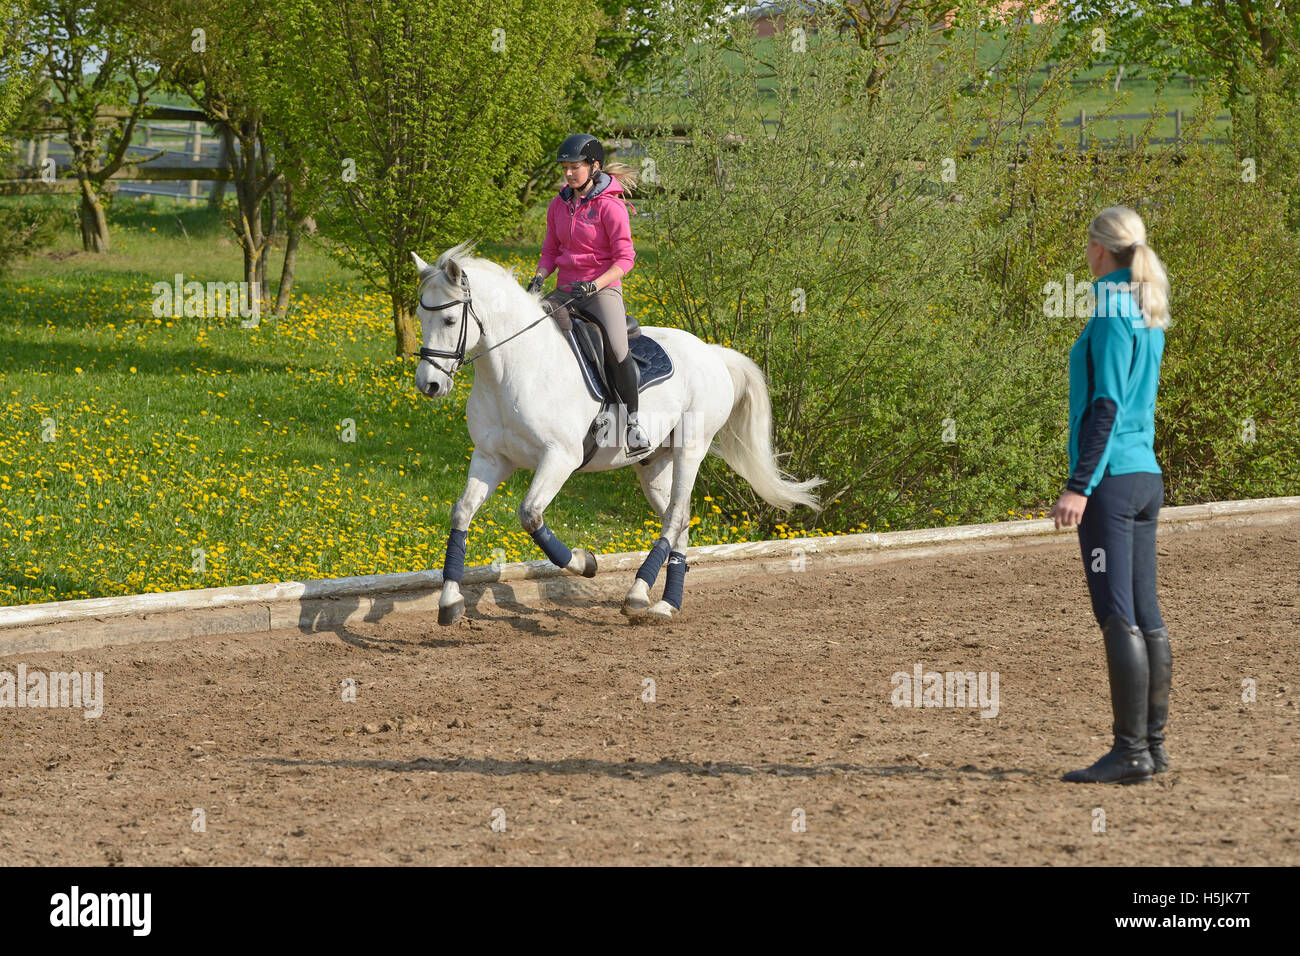 Riding lesson, P.R.E. horse cantering Stock Photo